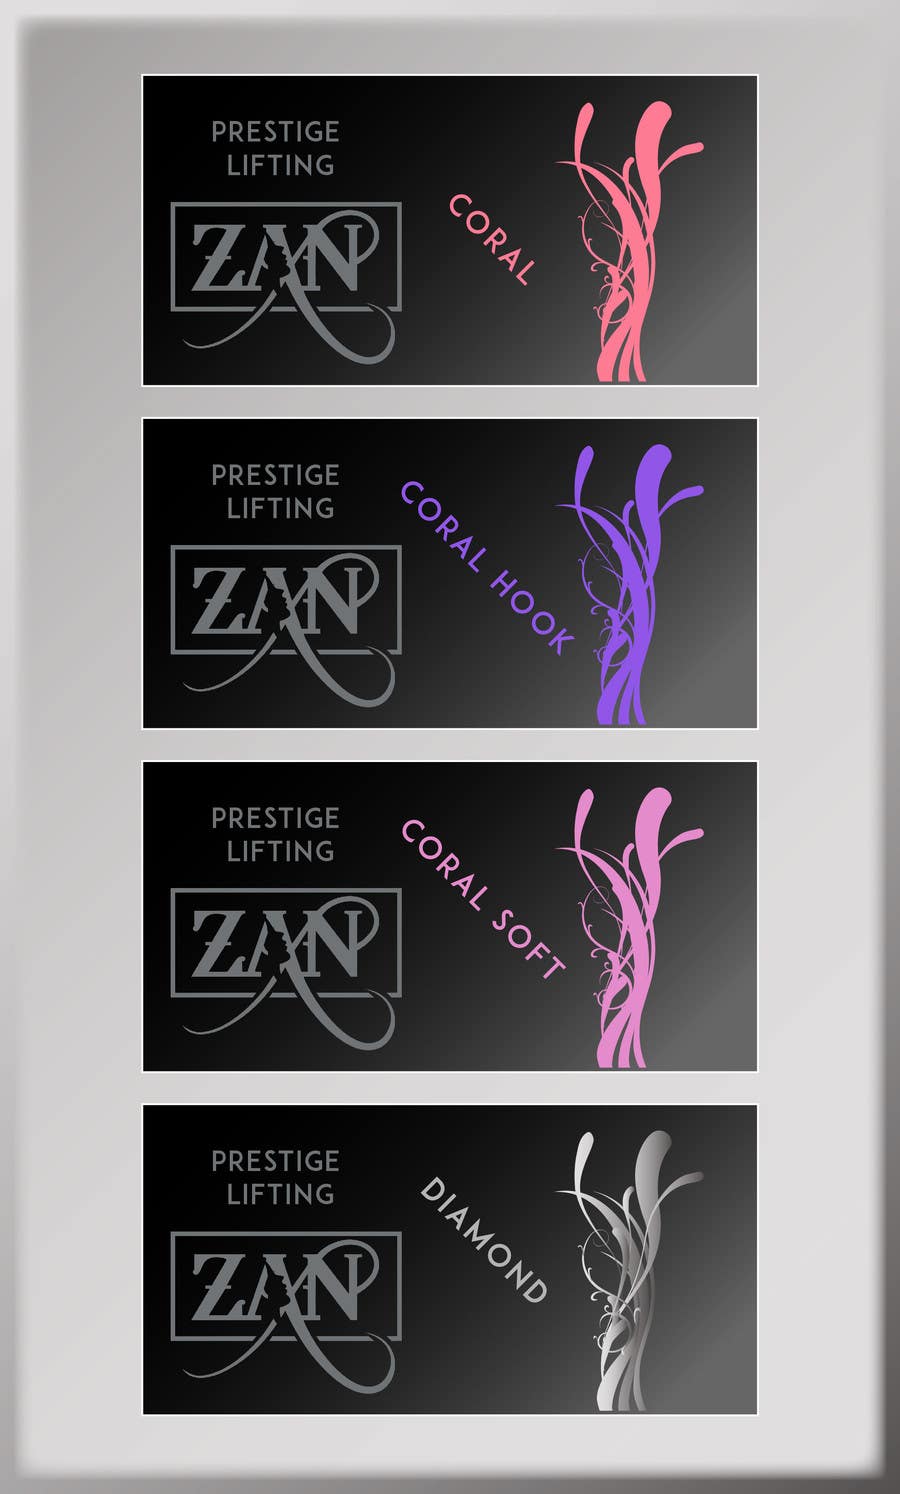 Kilpailutyö #40 kilpailussa                                                 Sticker for aesthetic medicine product PDO threads  ZAN Prestige Lifting.
                                            